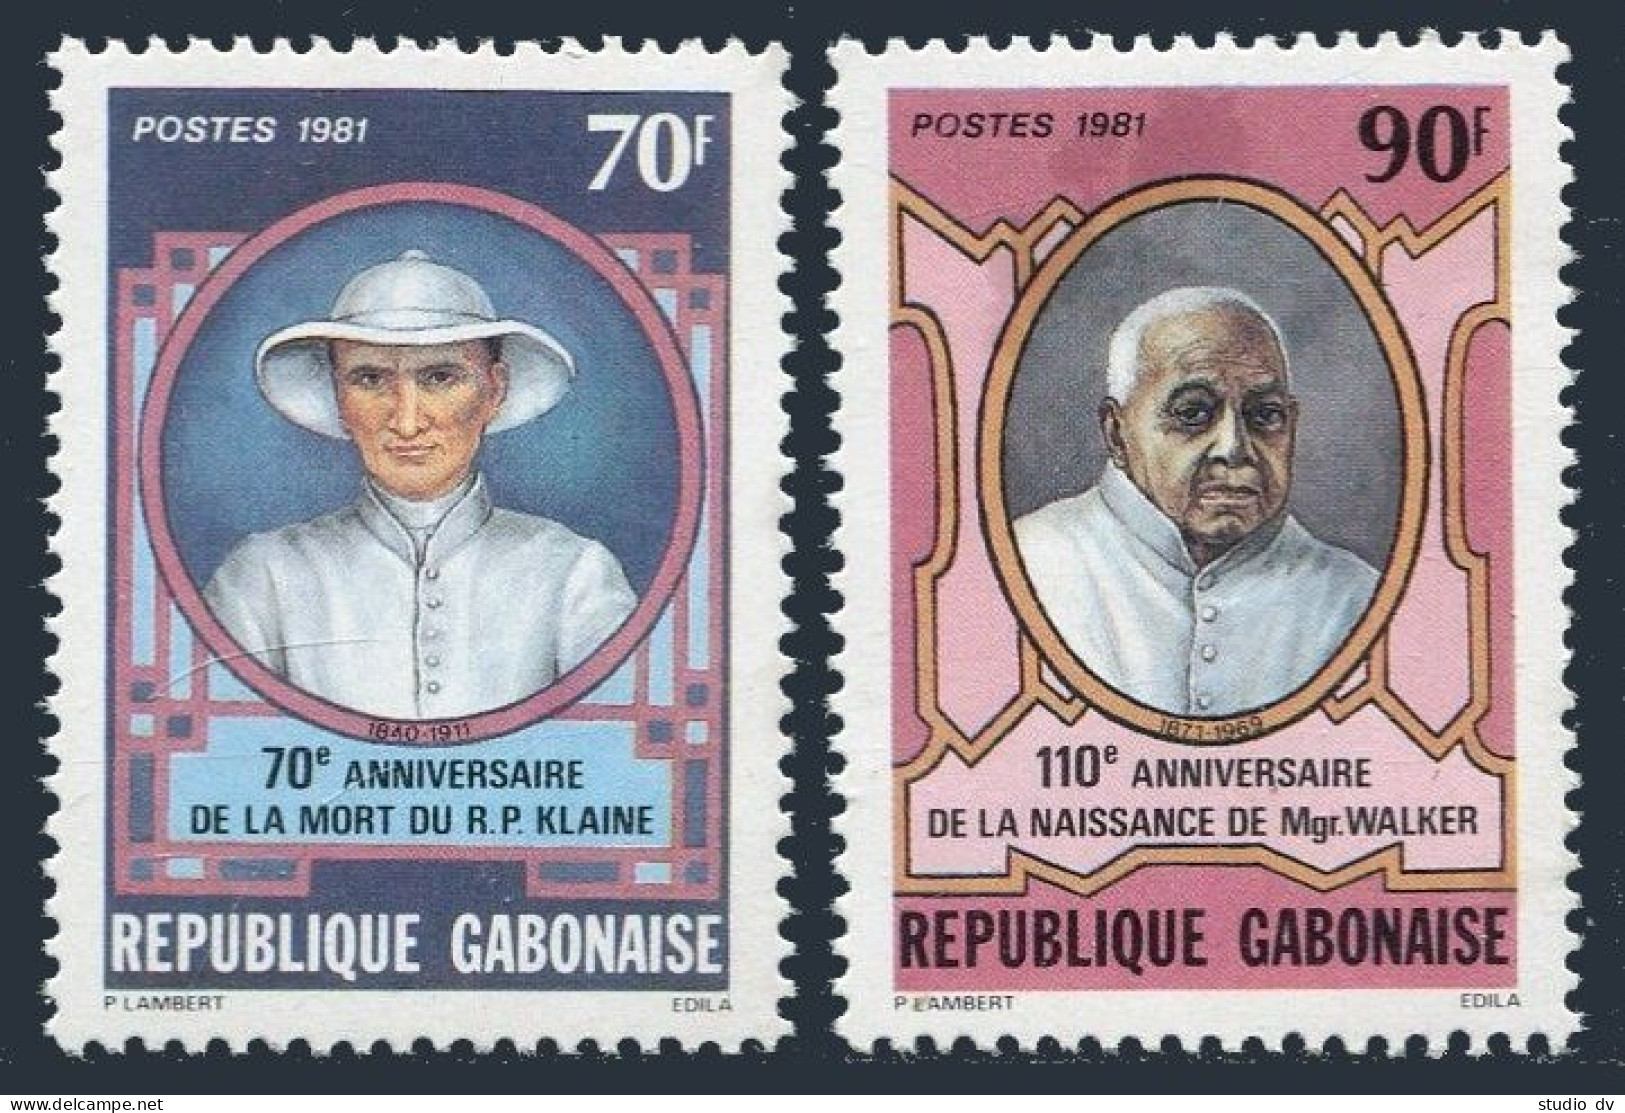 Gabon 475-476,MNH.Michel 795-796. R.P.Klaine,missionary,Archbishop Walker,1981. - Gabon